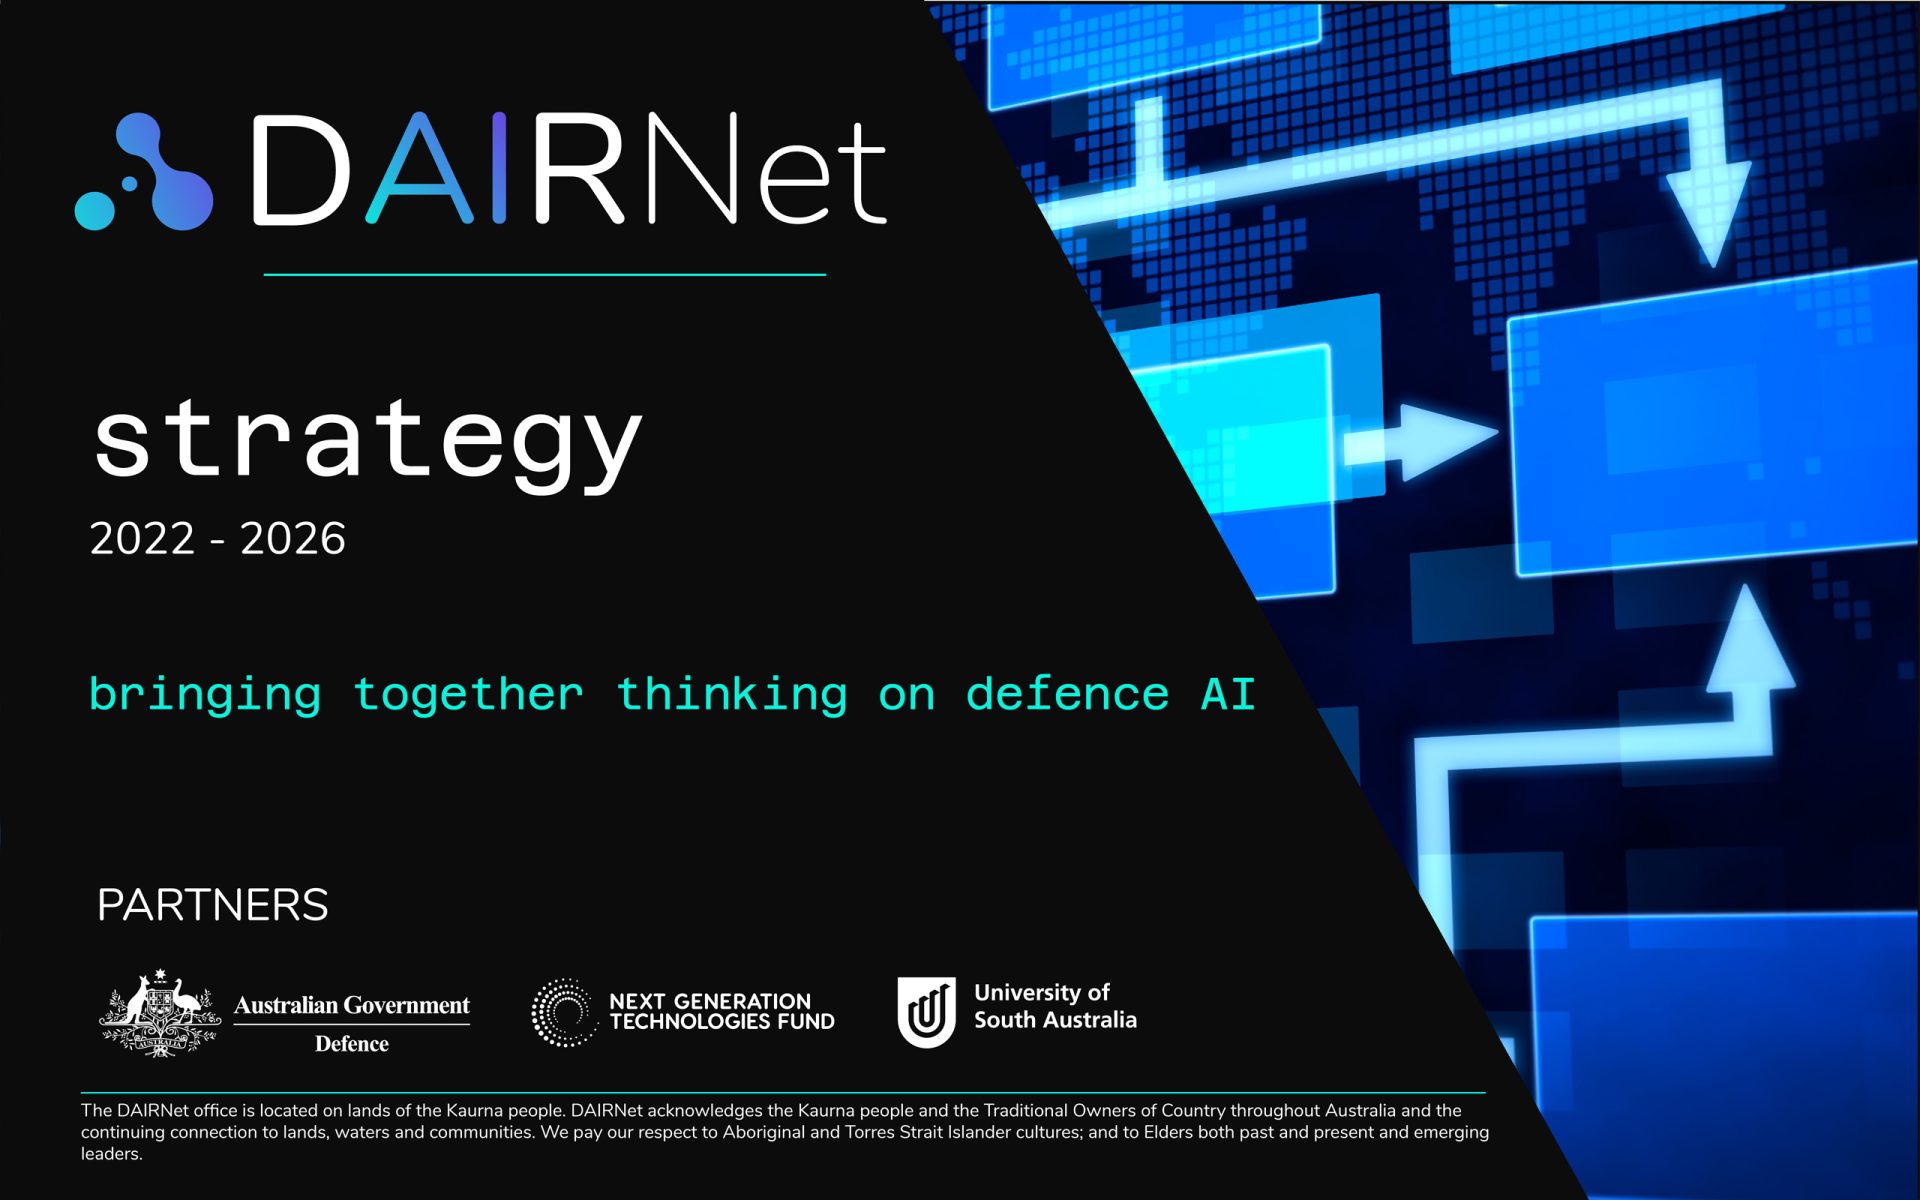 DAIRNet strategy 2022-2026